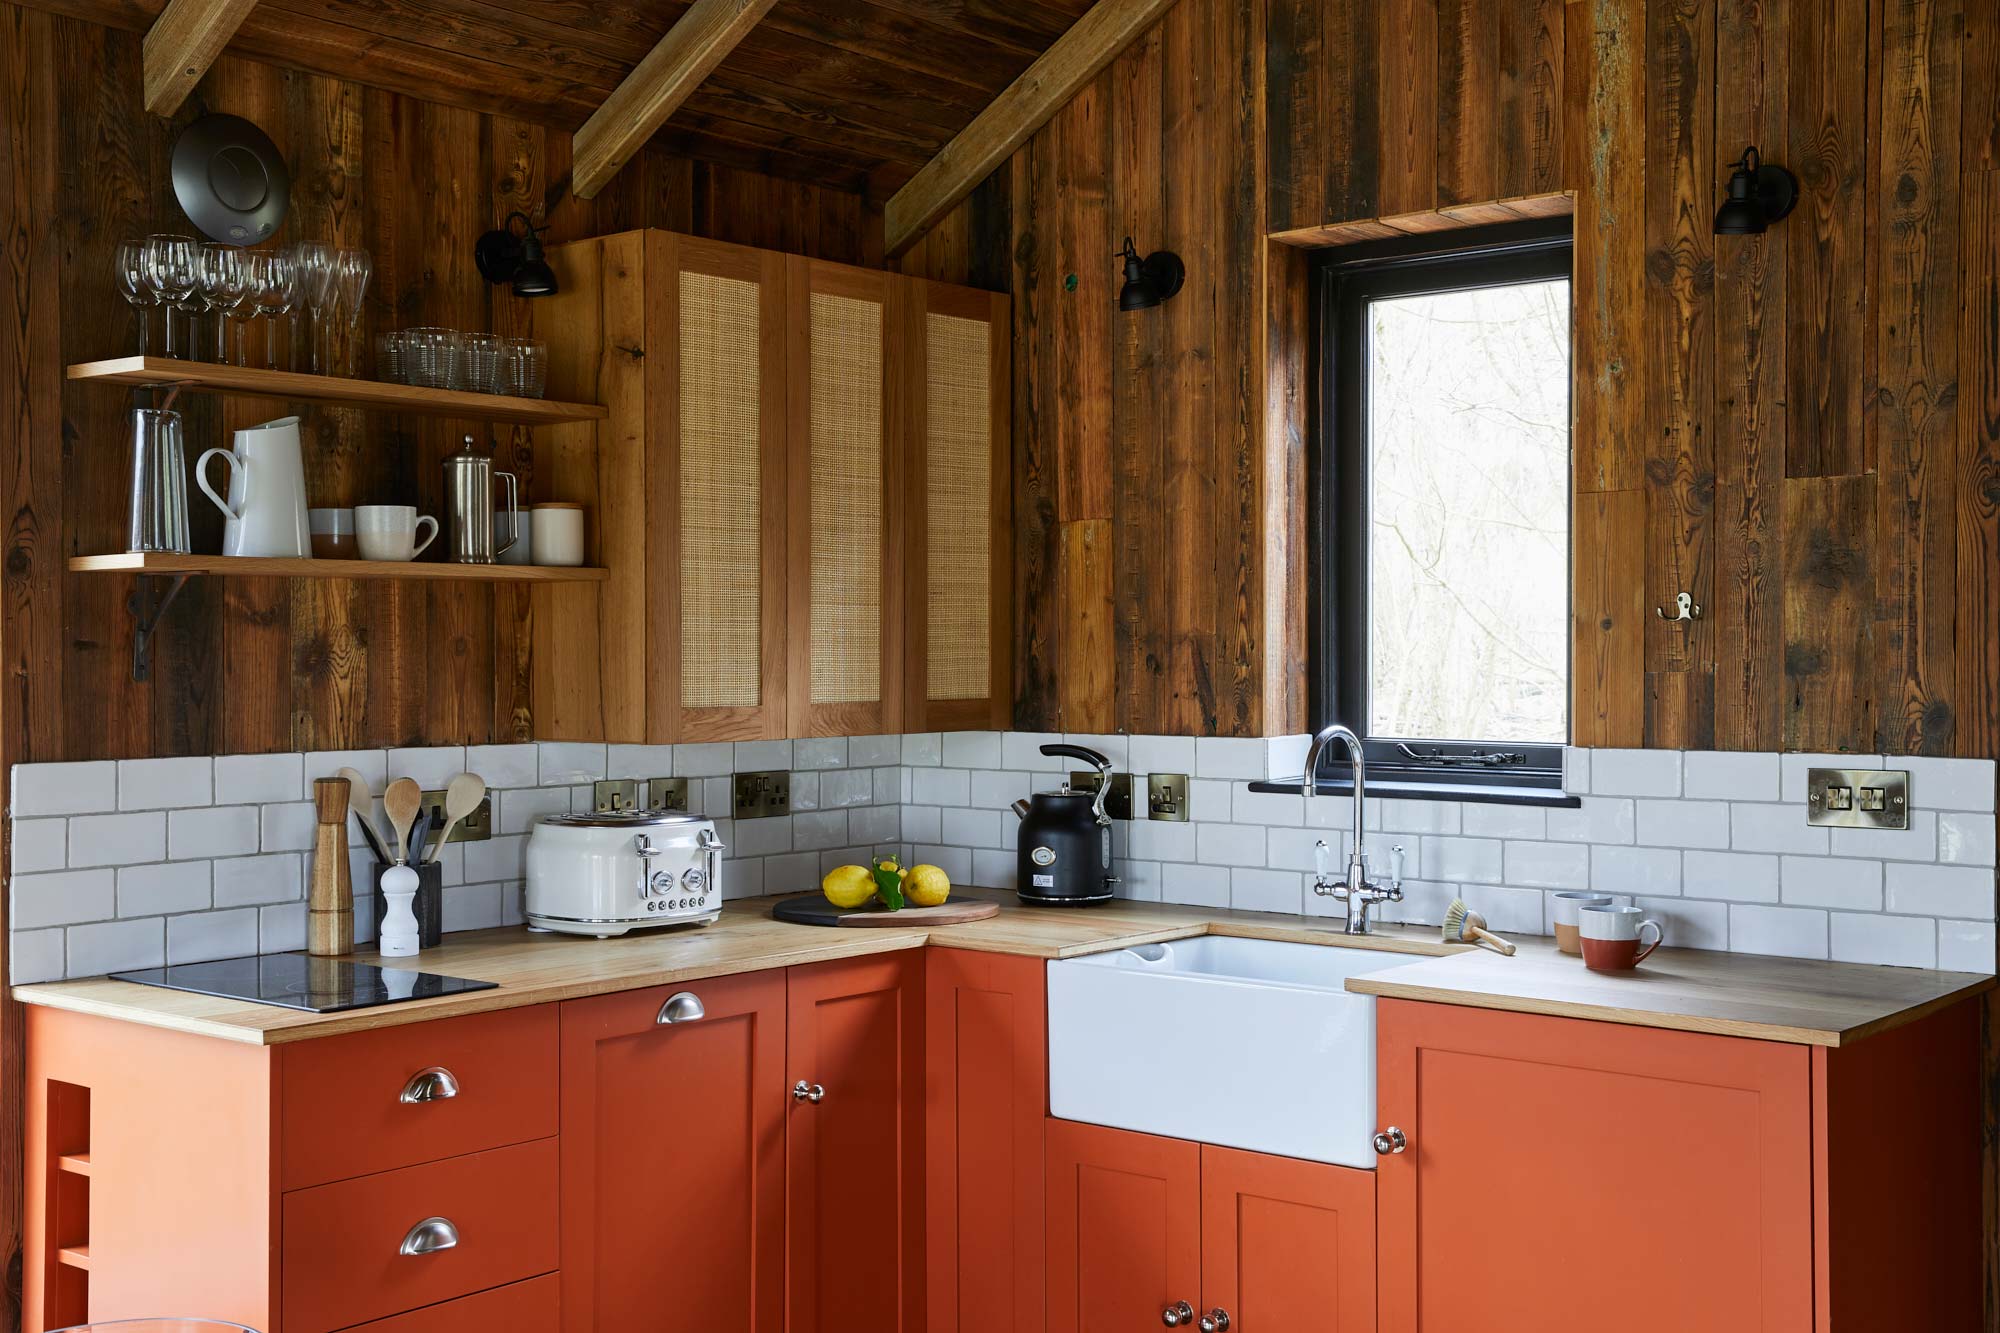 Bespoke orange kitchen in treehouse